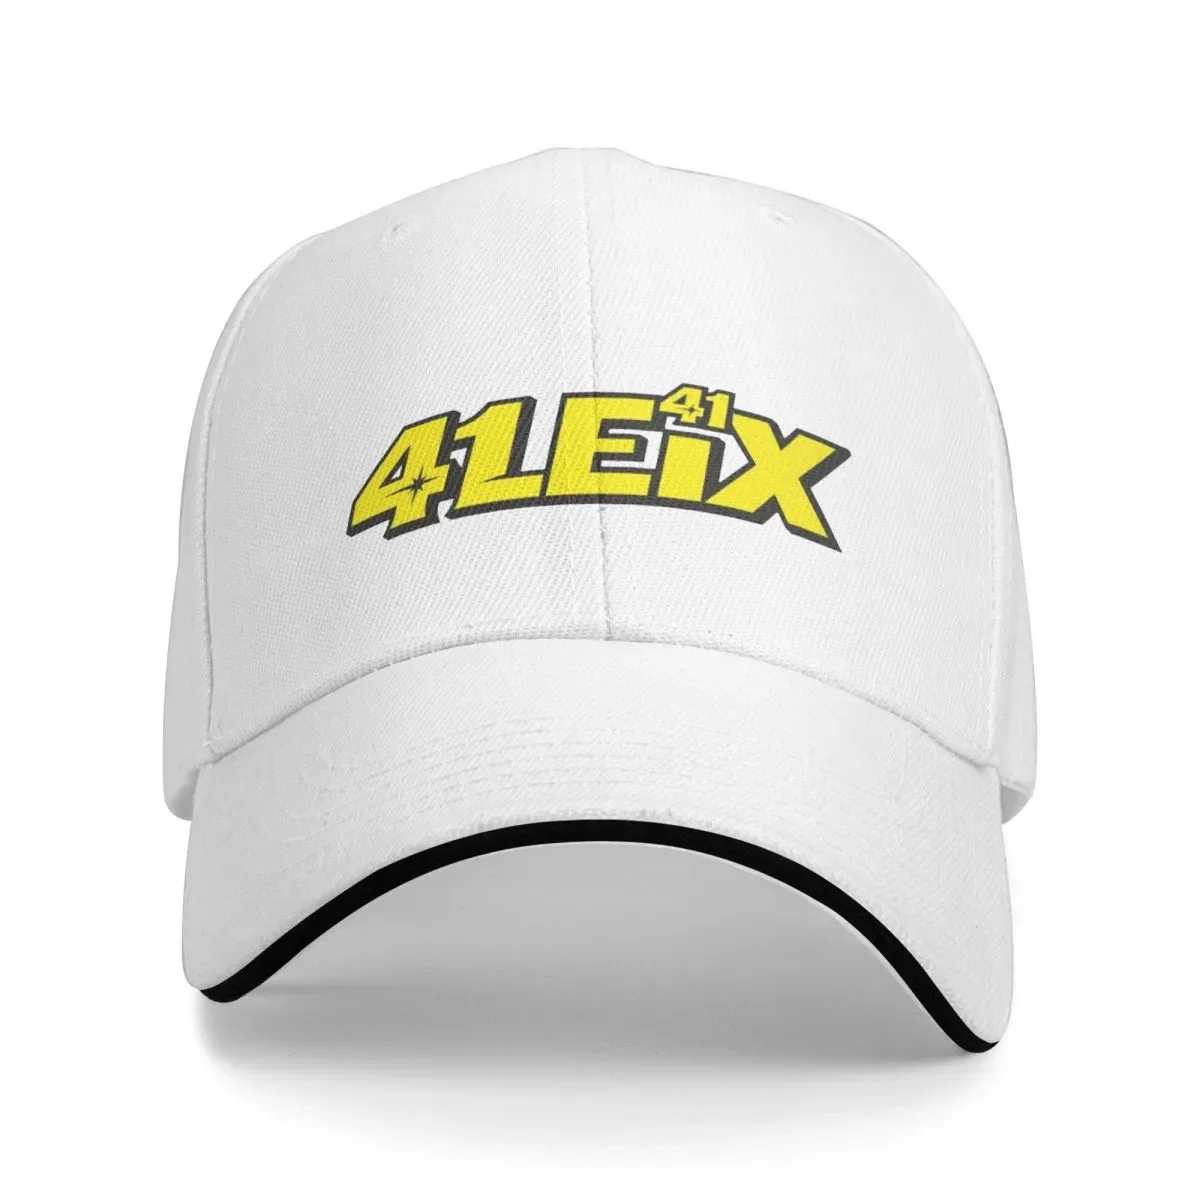 

New Aleix Espargaro 41 Cap Baseball Cap Fishing caps kids hat uv protection solar hat women's hat 2023 Men's